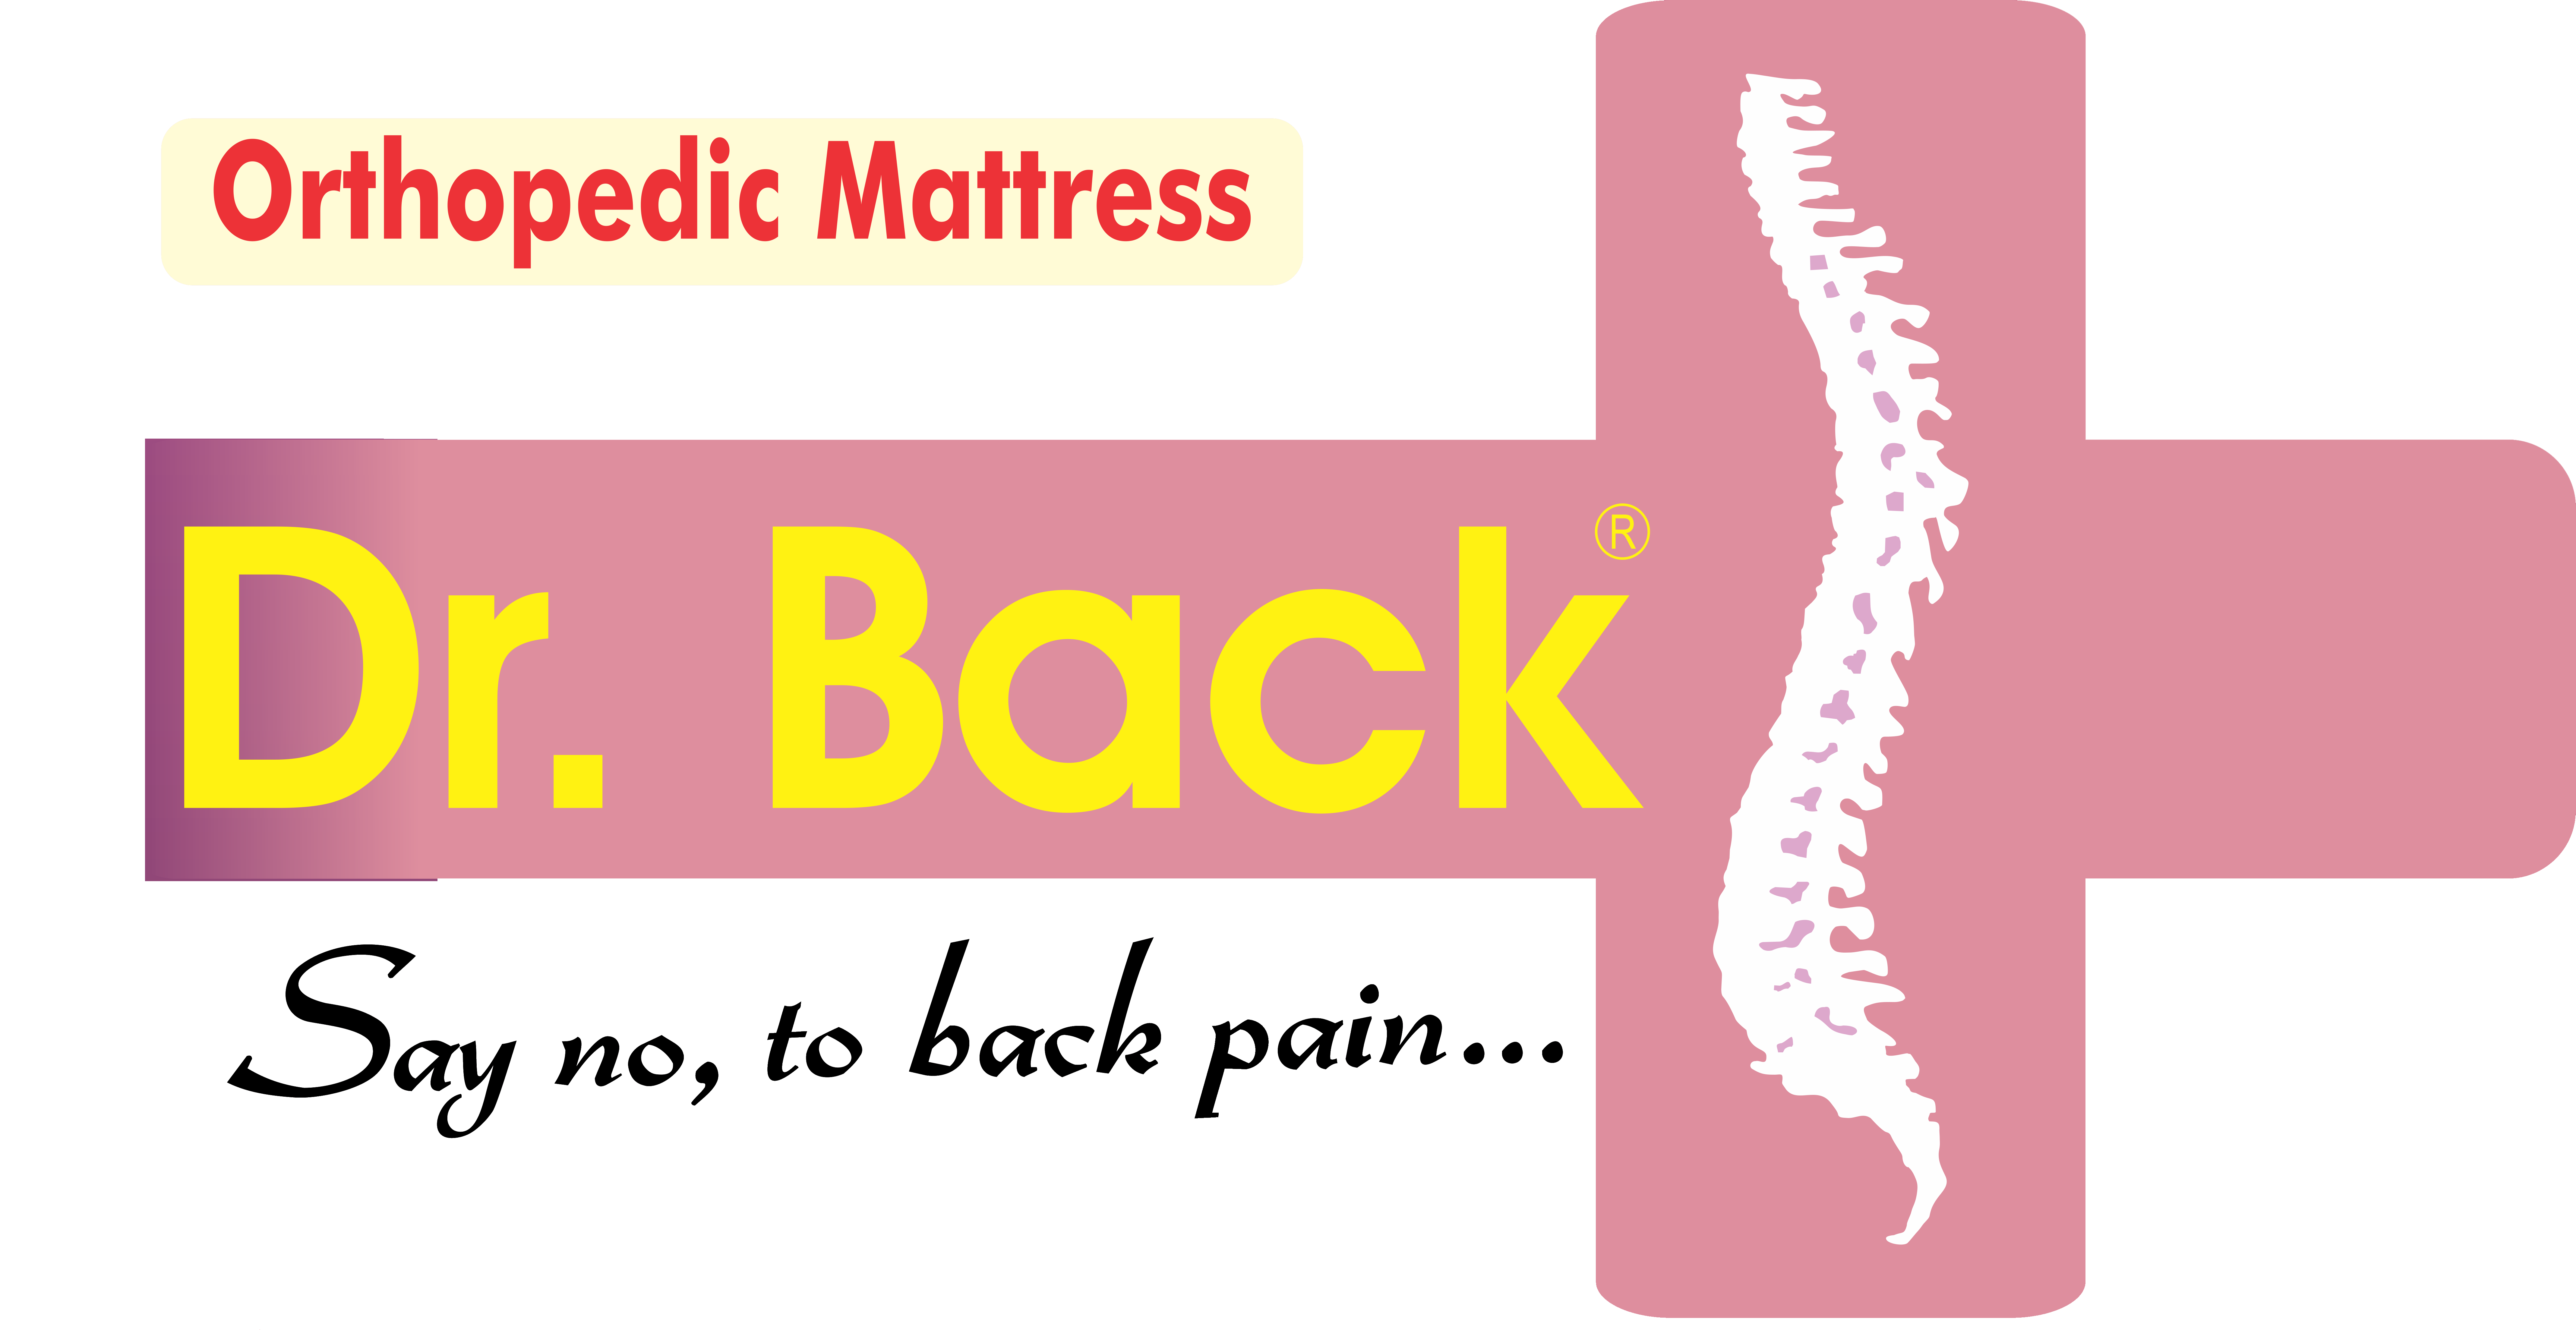 dr back mattress in nepal